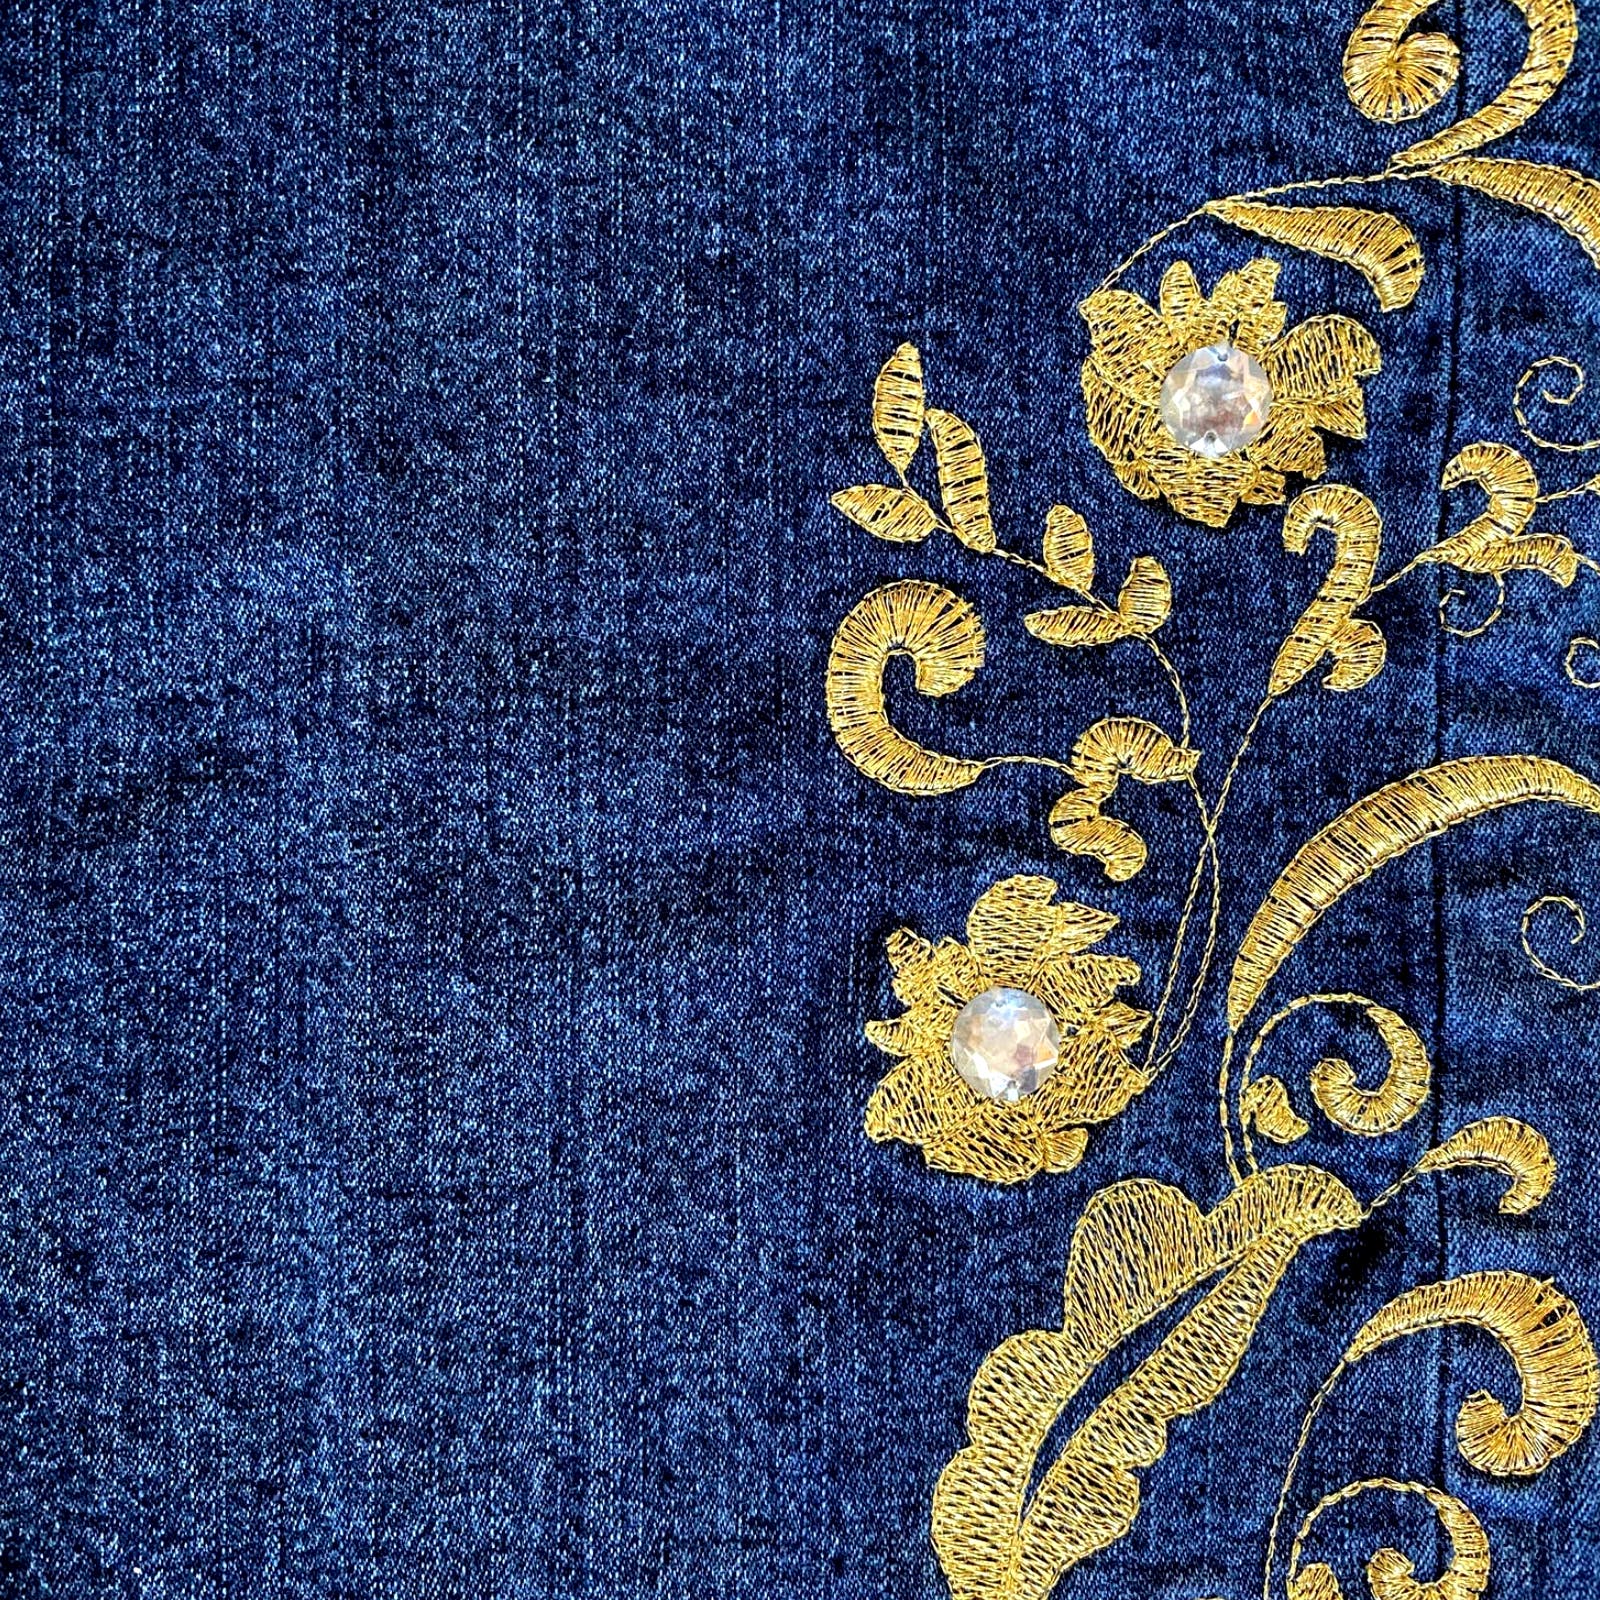 Denim 24/7 Dark Wash Blue Jeans Sz 22WP Short High Rise Mom Gold Embroidery EUC